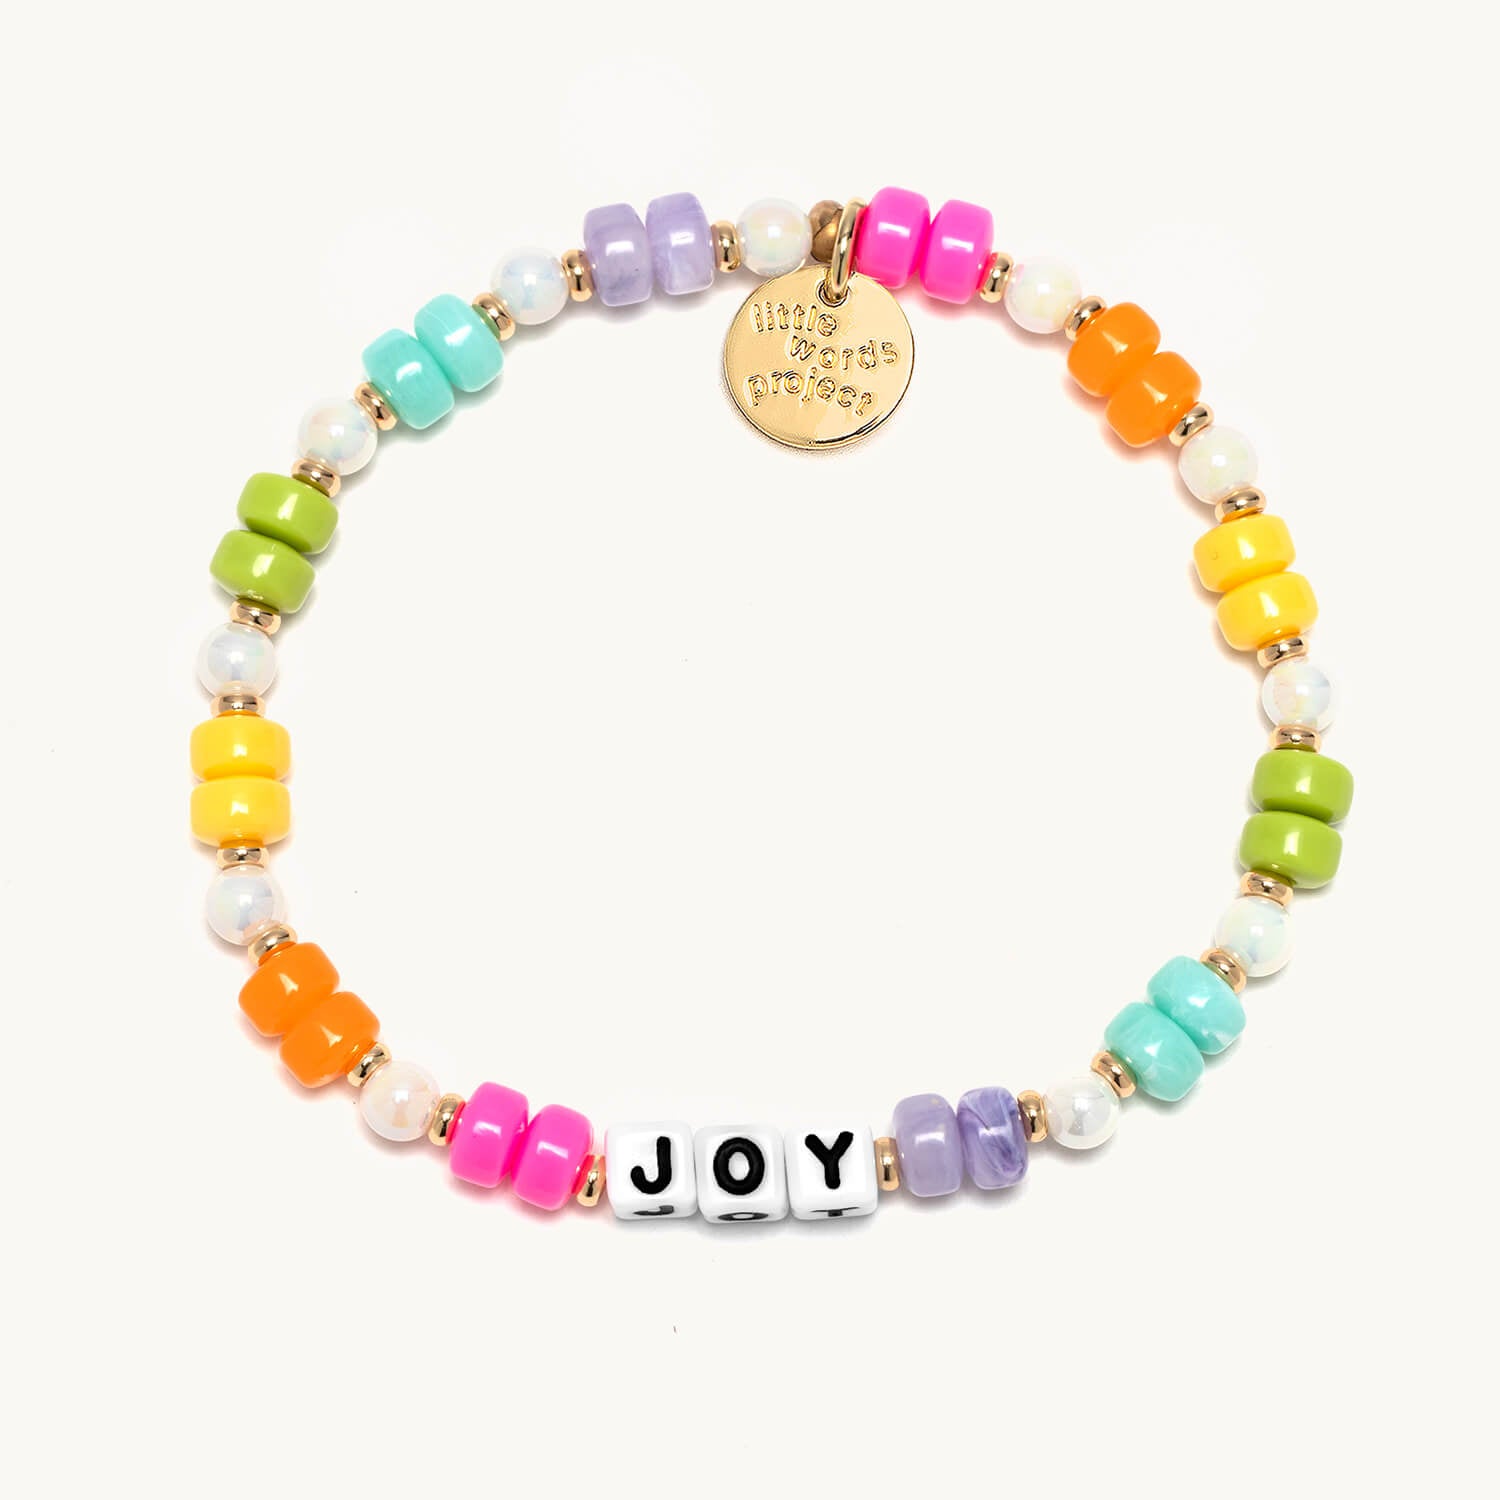 Joy- Sunkissed Dreams Bracelet